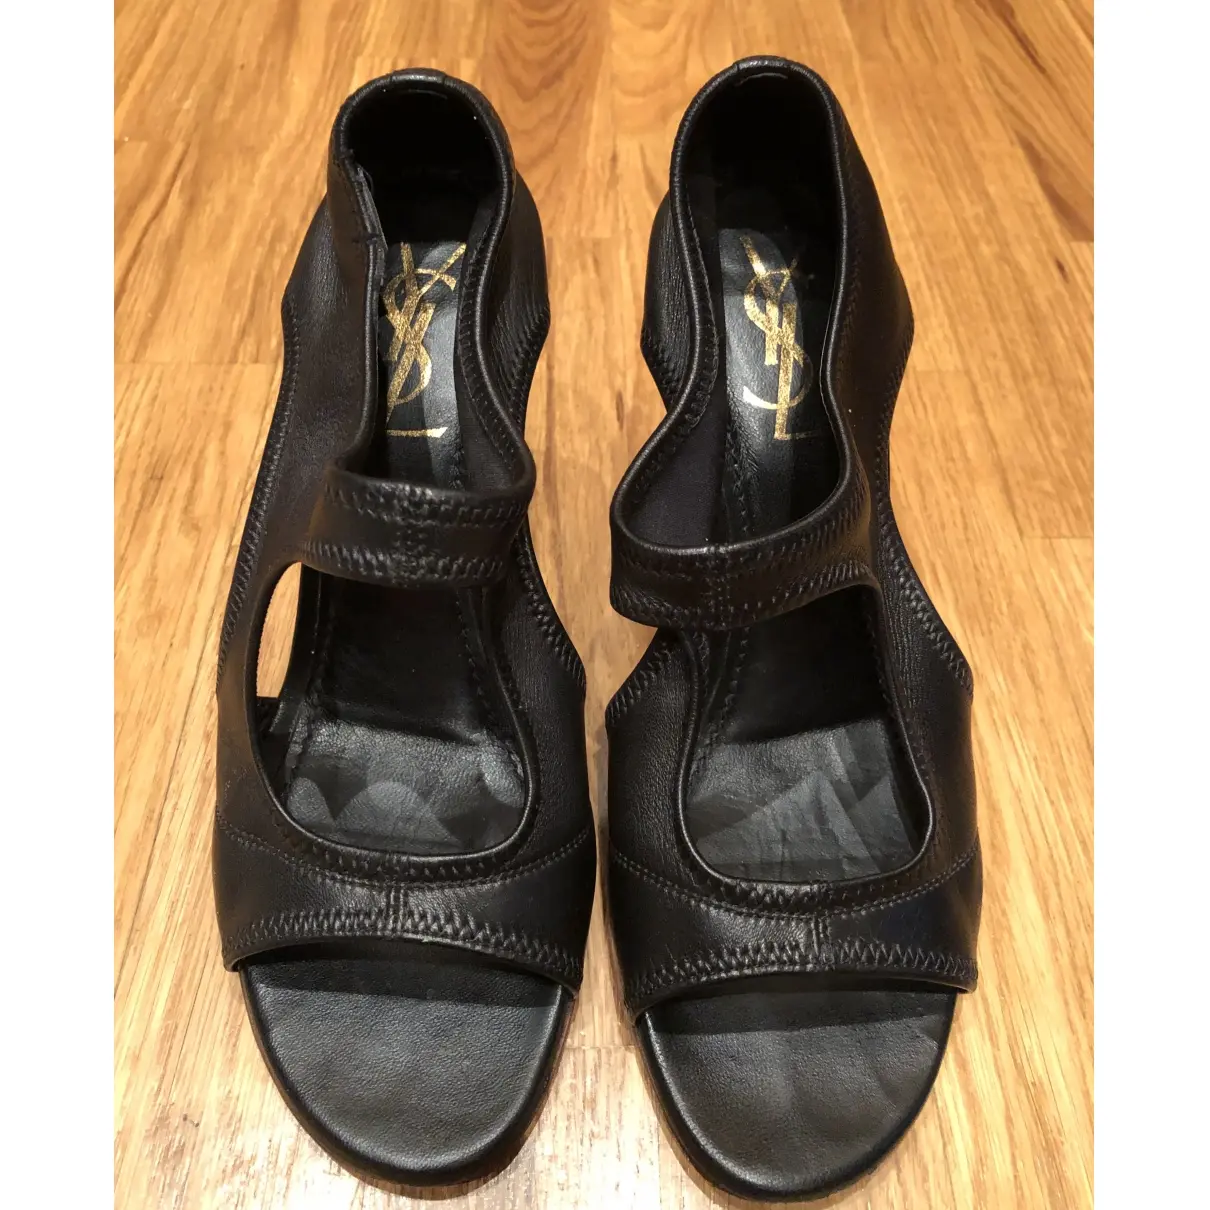 Yves Saint Laurent Leather sandals for sale